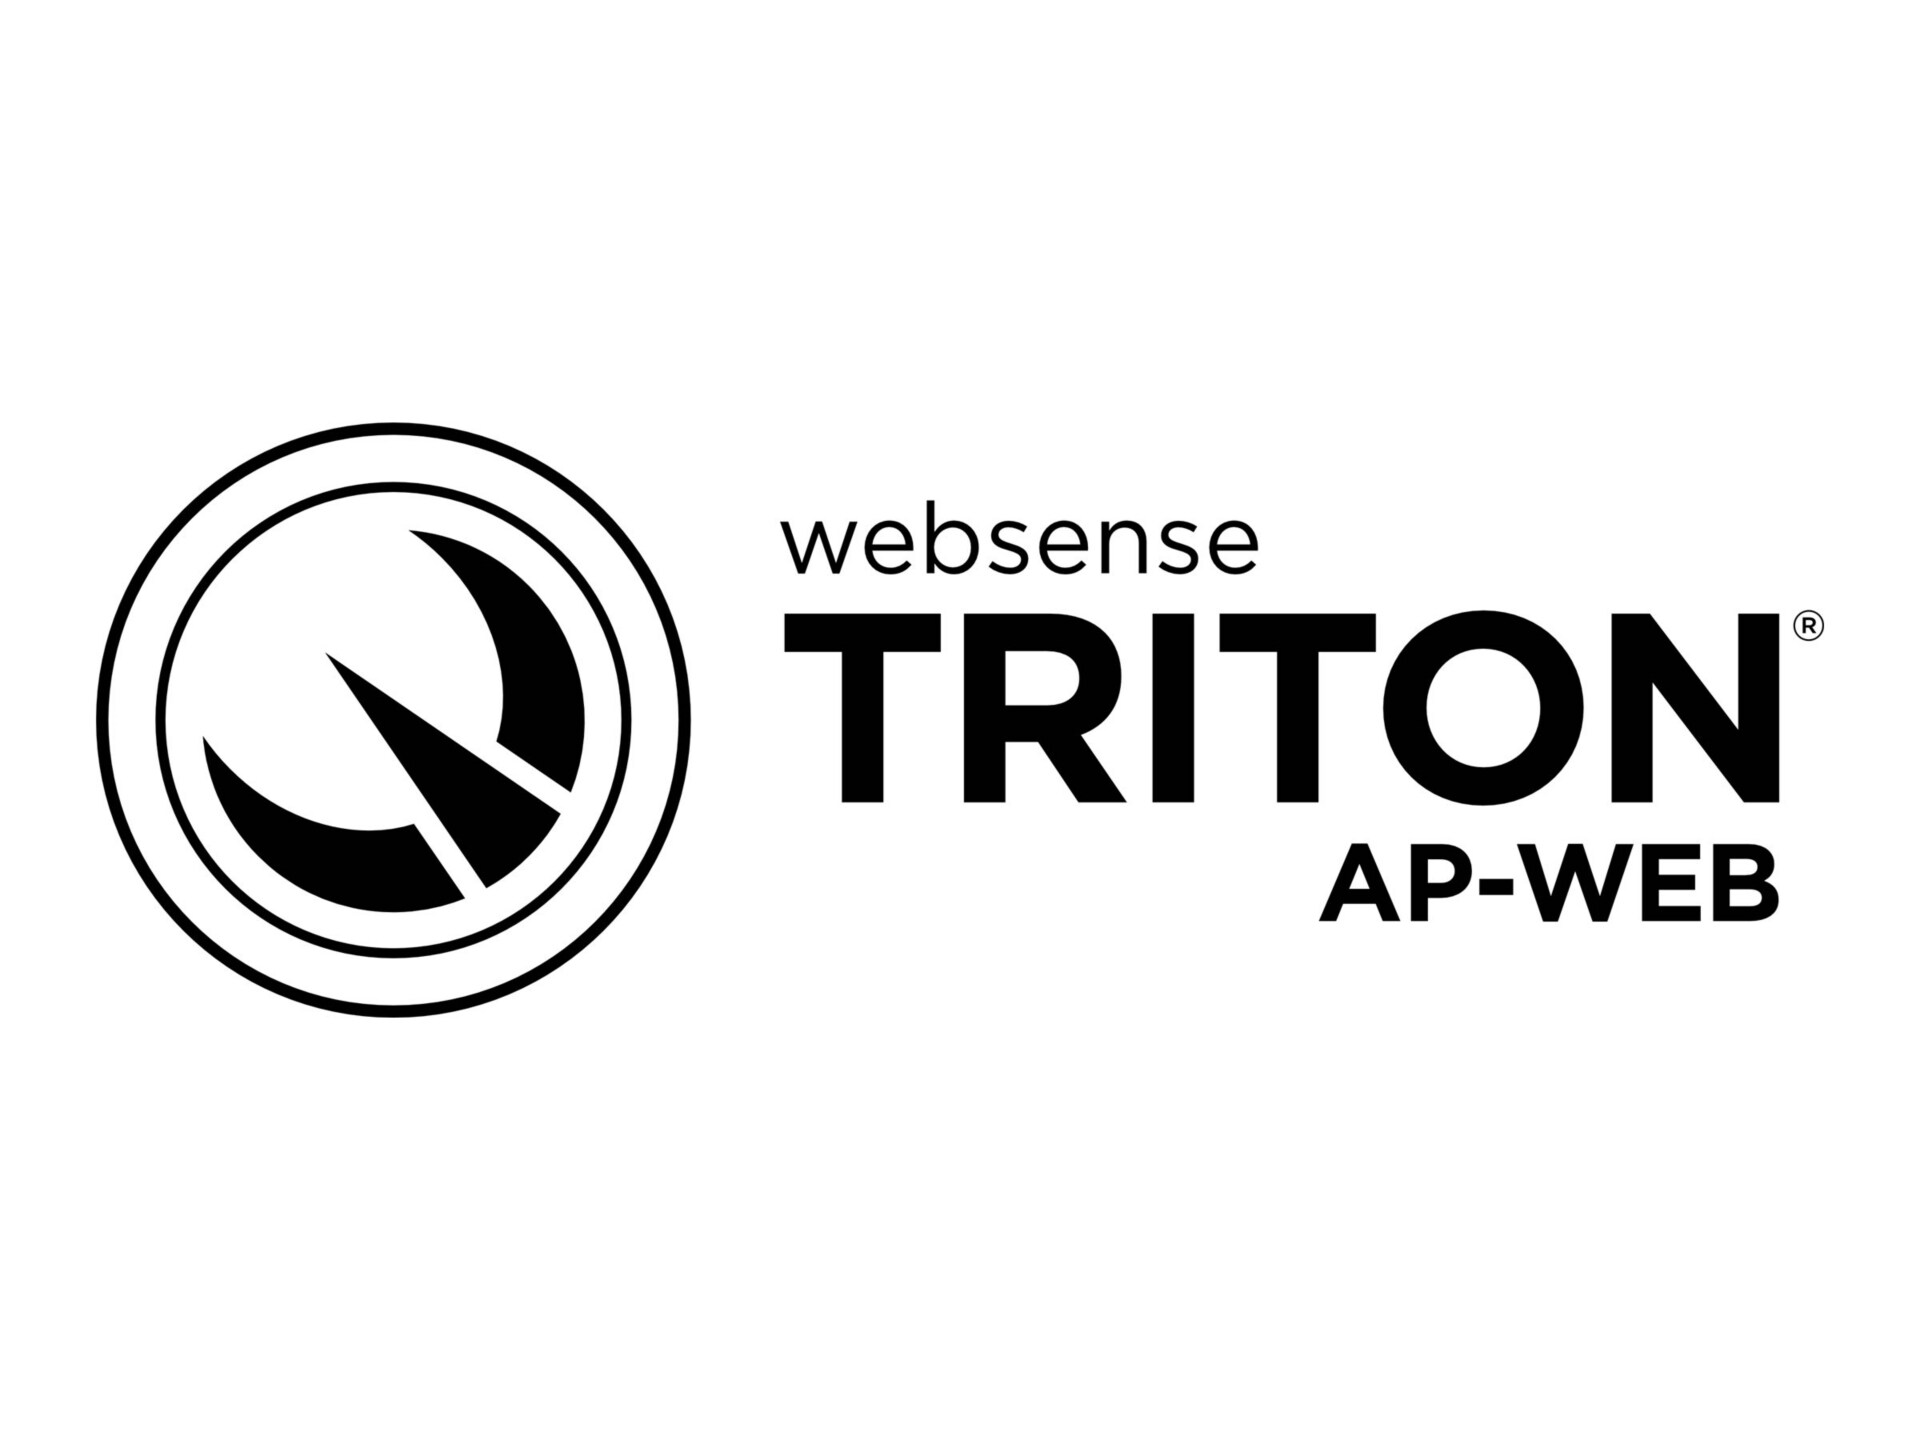 TRITON AP-WEB - subscription license renewal (6 months) - 1 seat